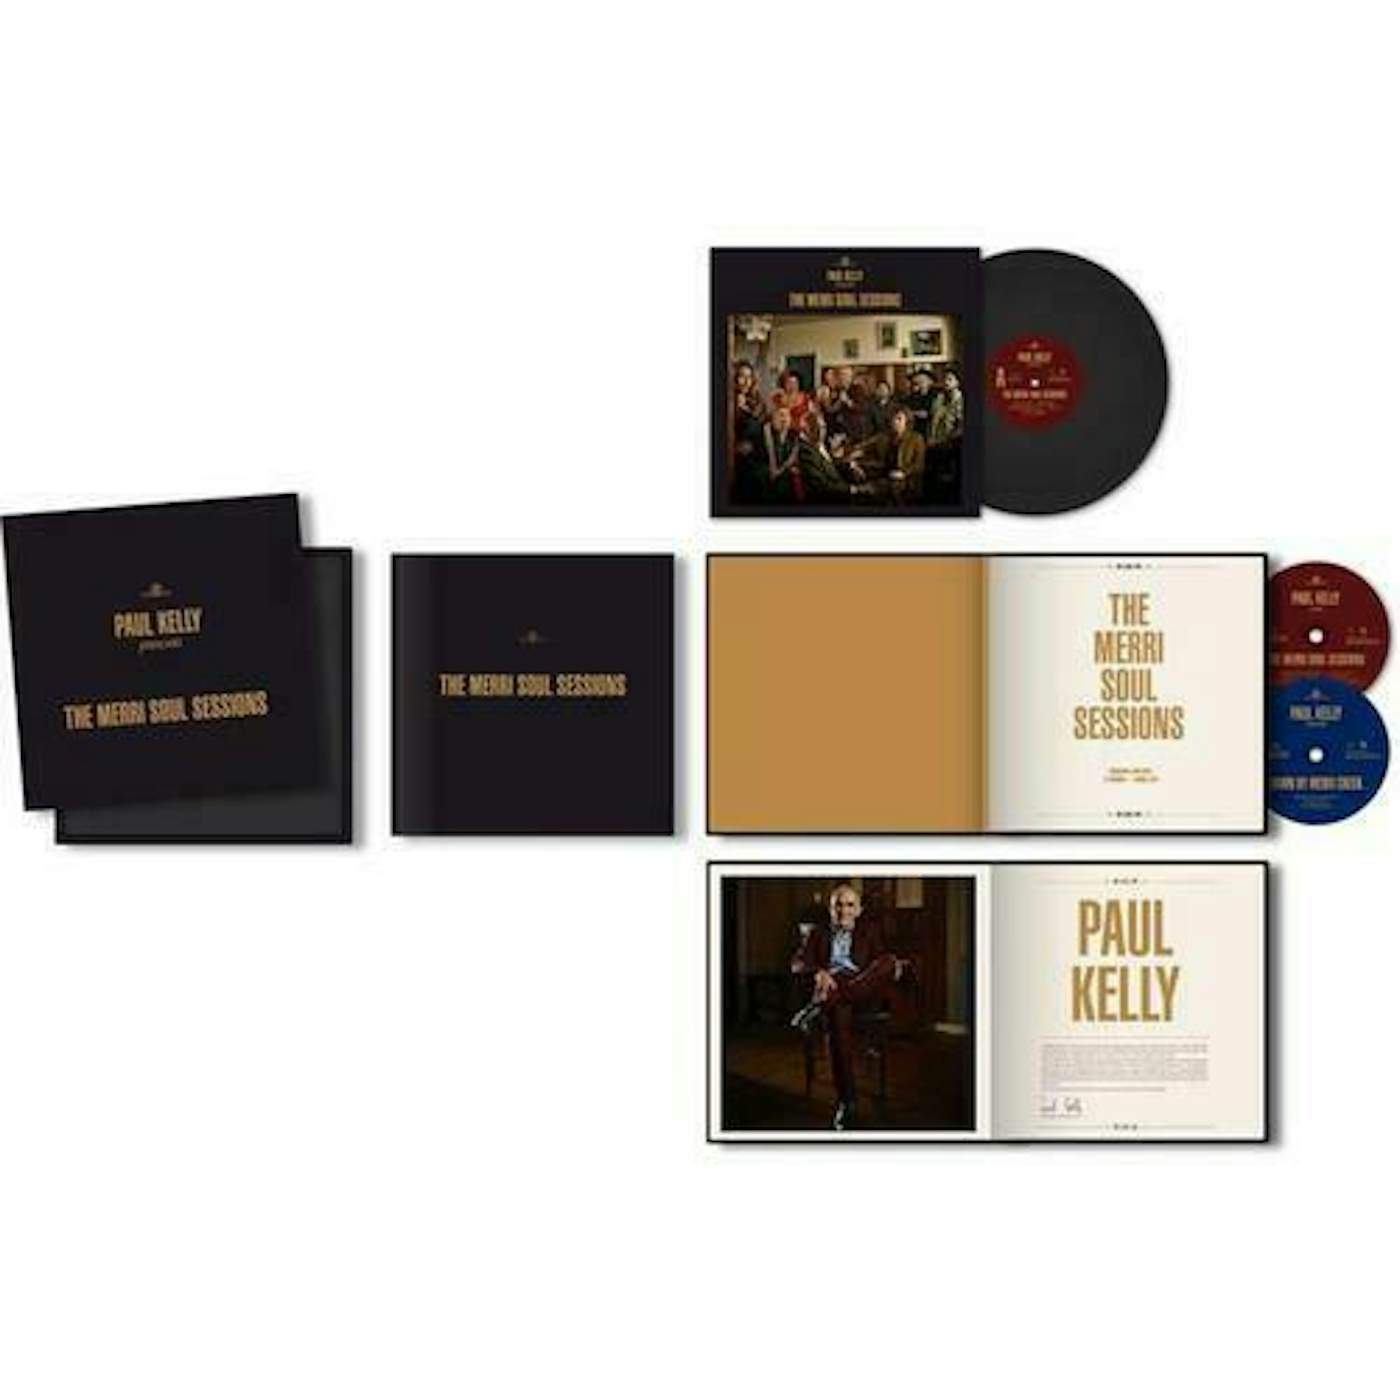 Paul Kelly The Merri Soul Sessions (Deluxe Box Set)